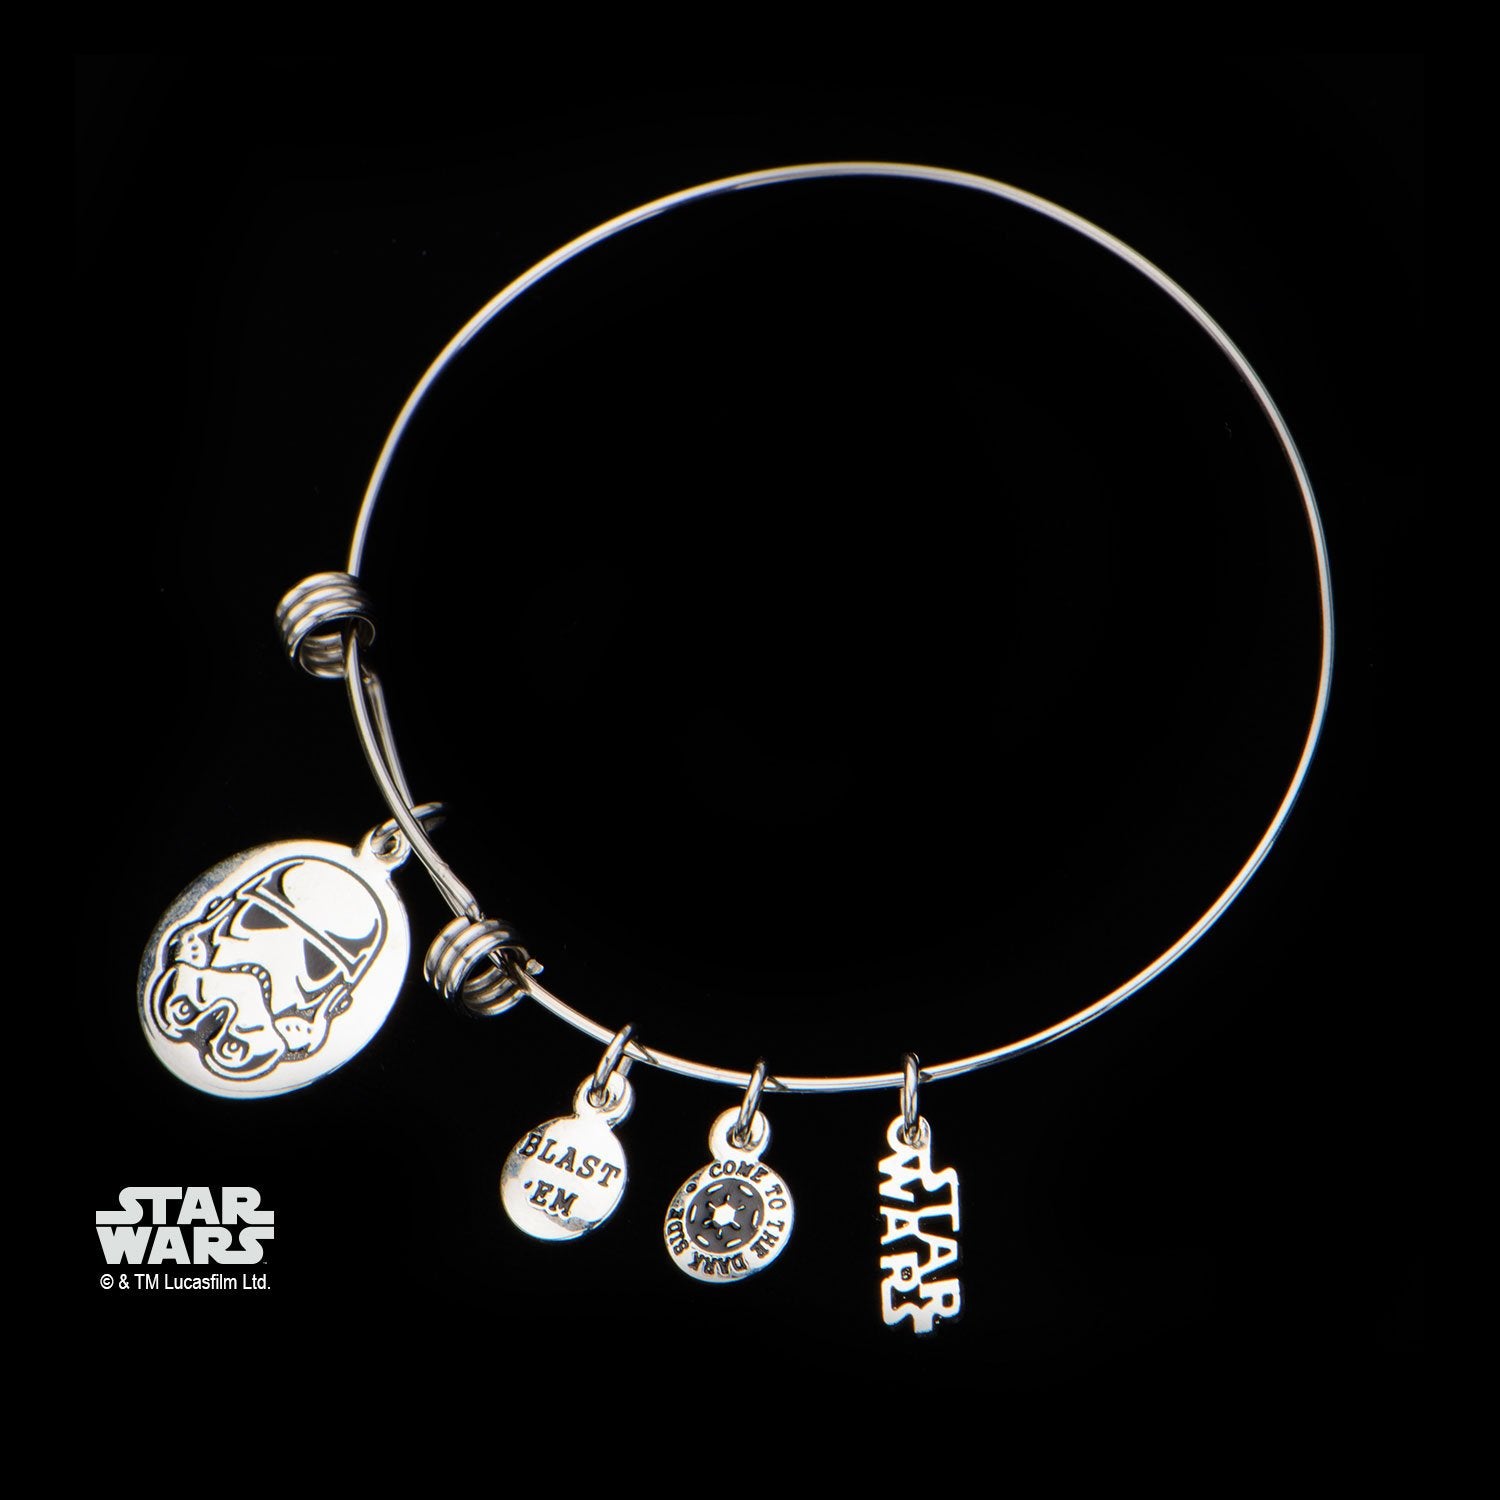 Star Wars Stormtrooper Charm Expandable Bracelet